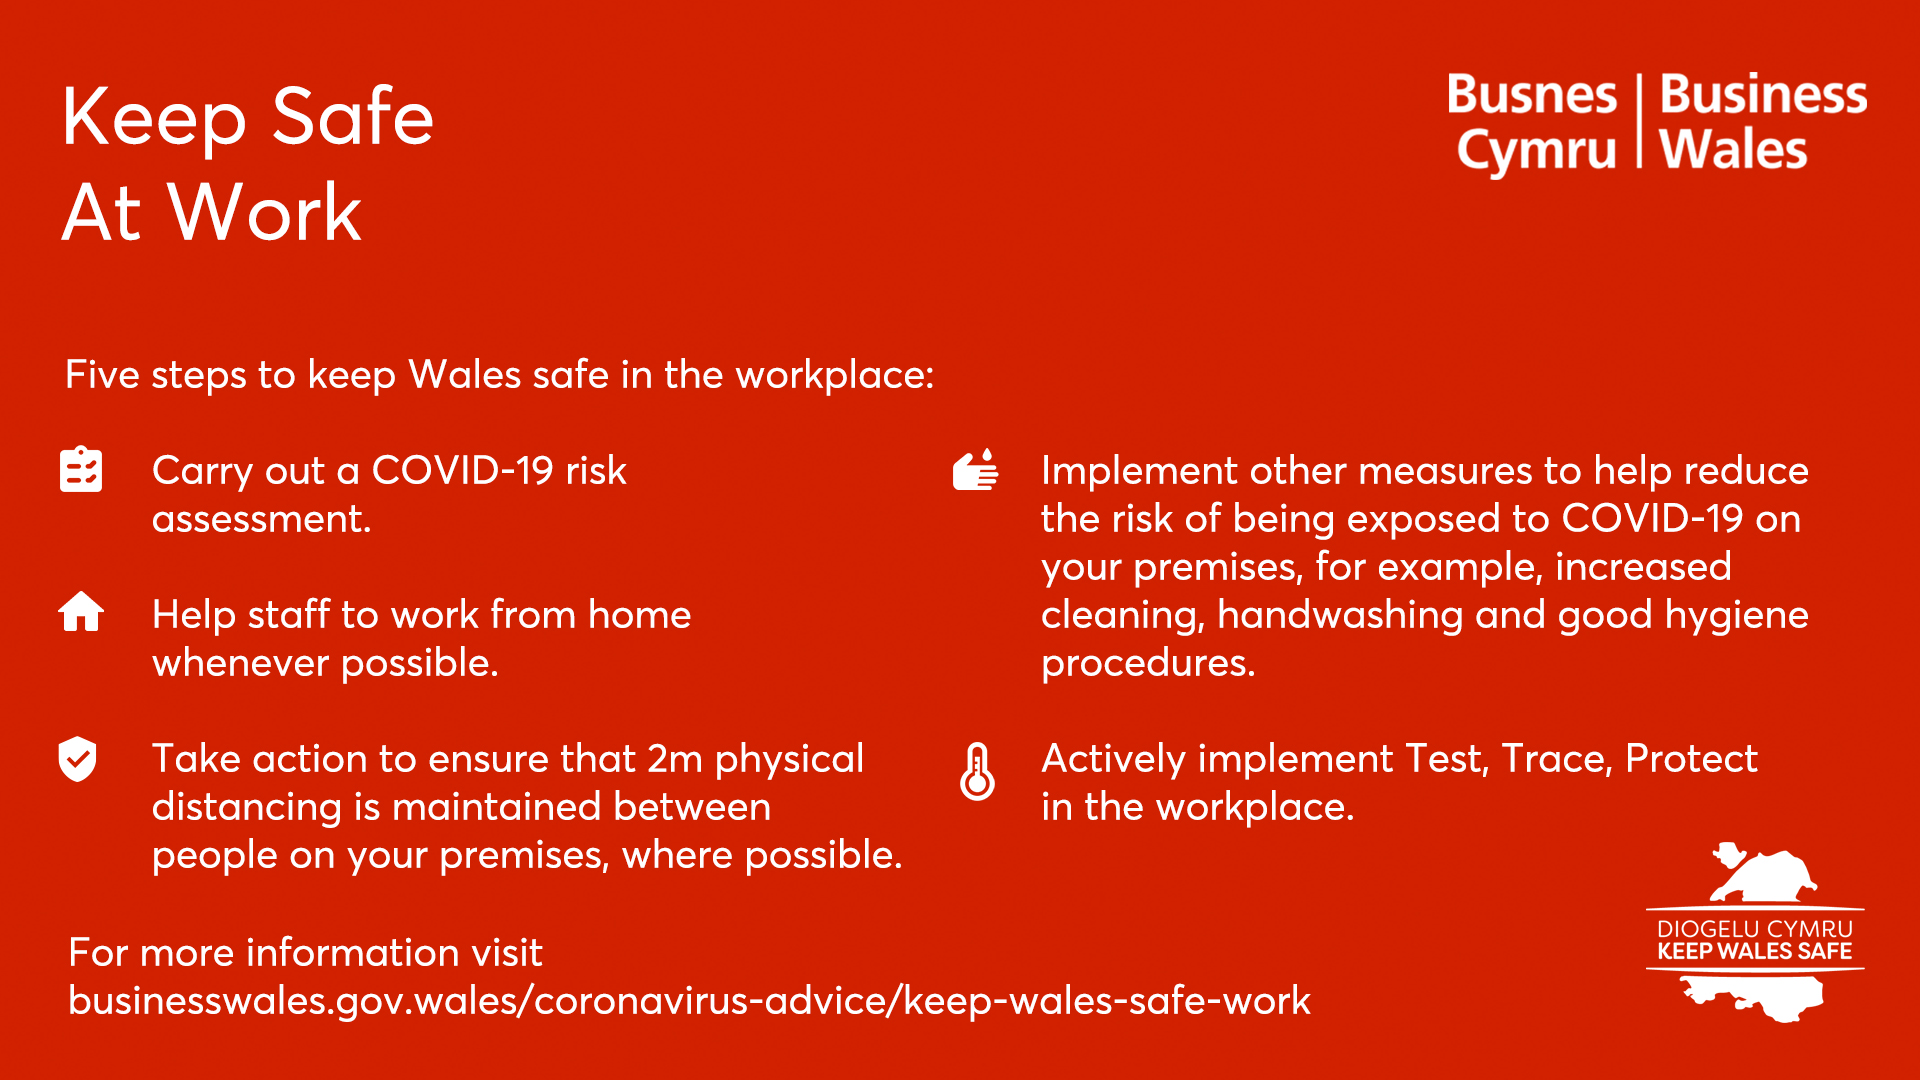 Keep Wales Safe at Work